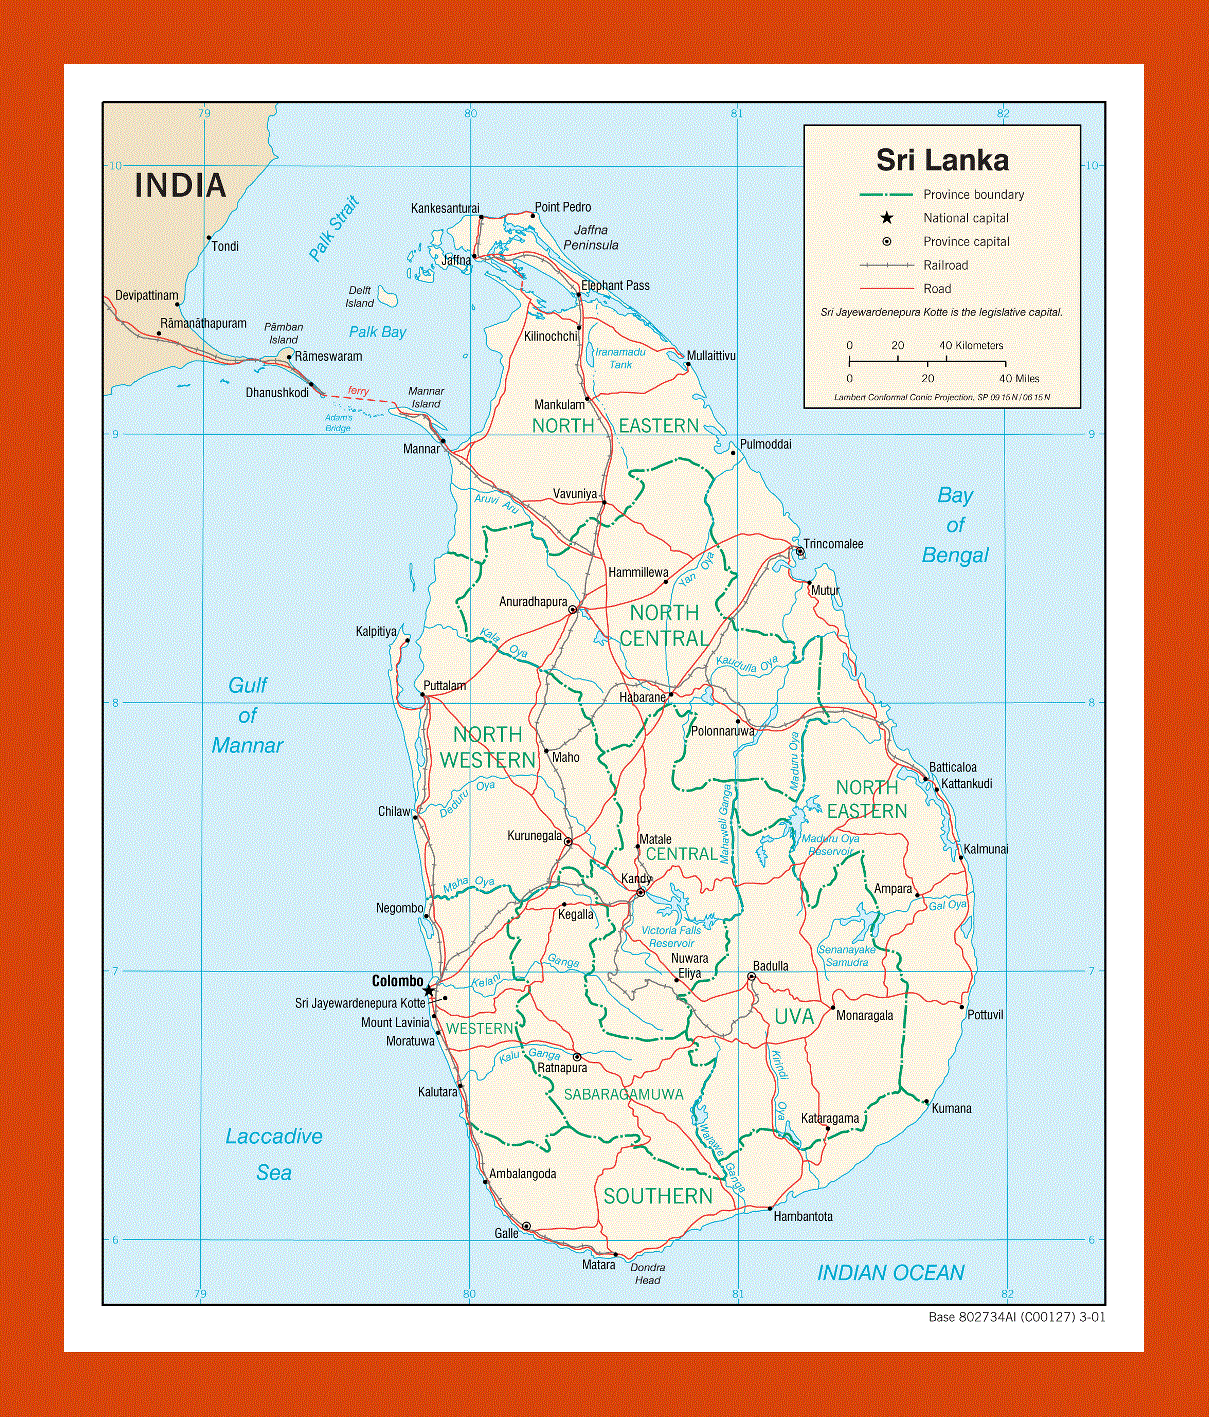 Political and administrative map of Sri Lanka - 2001